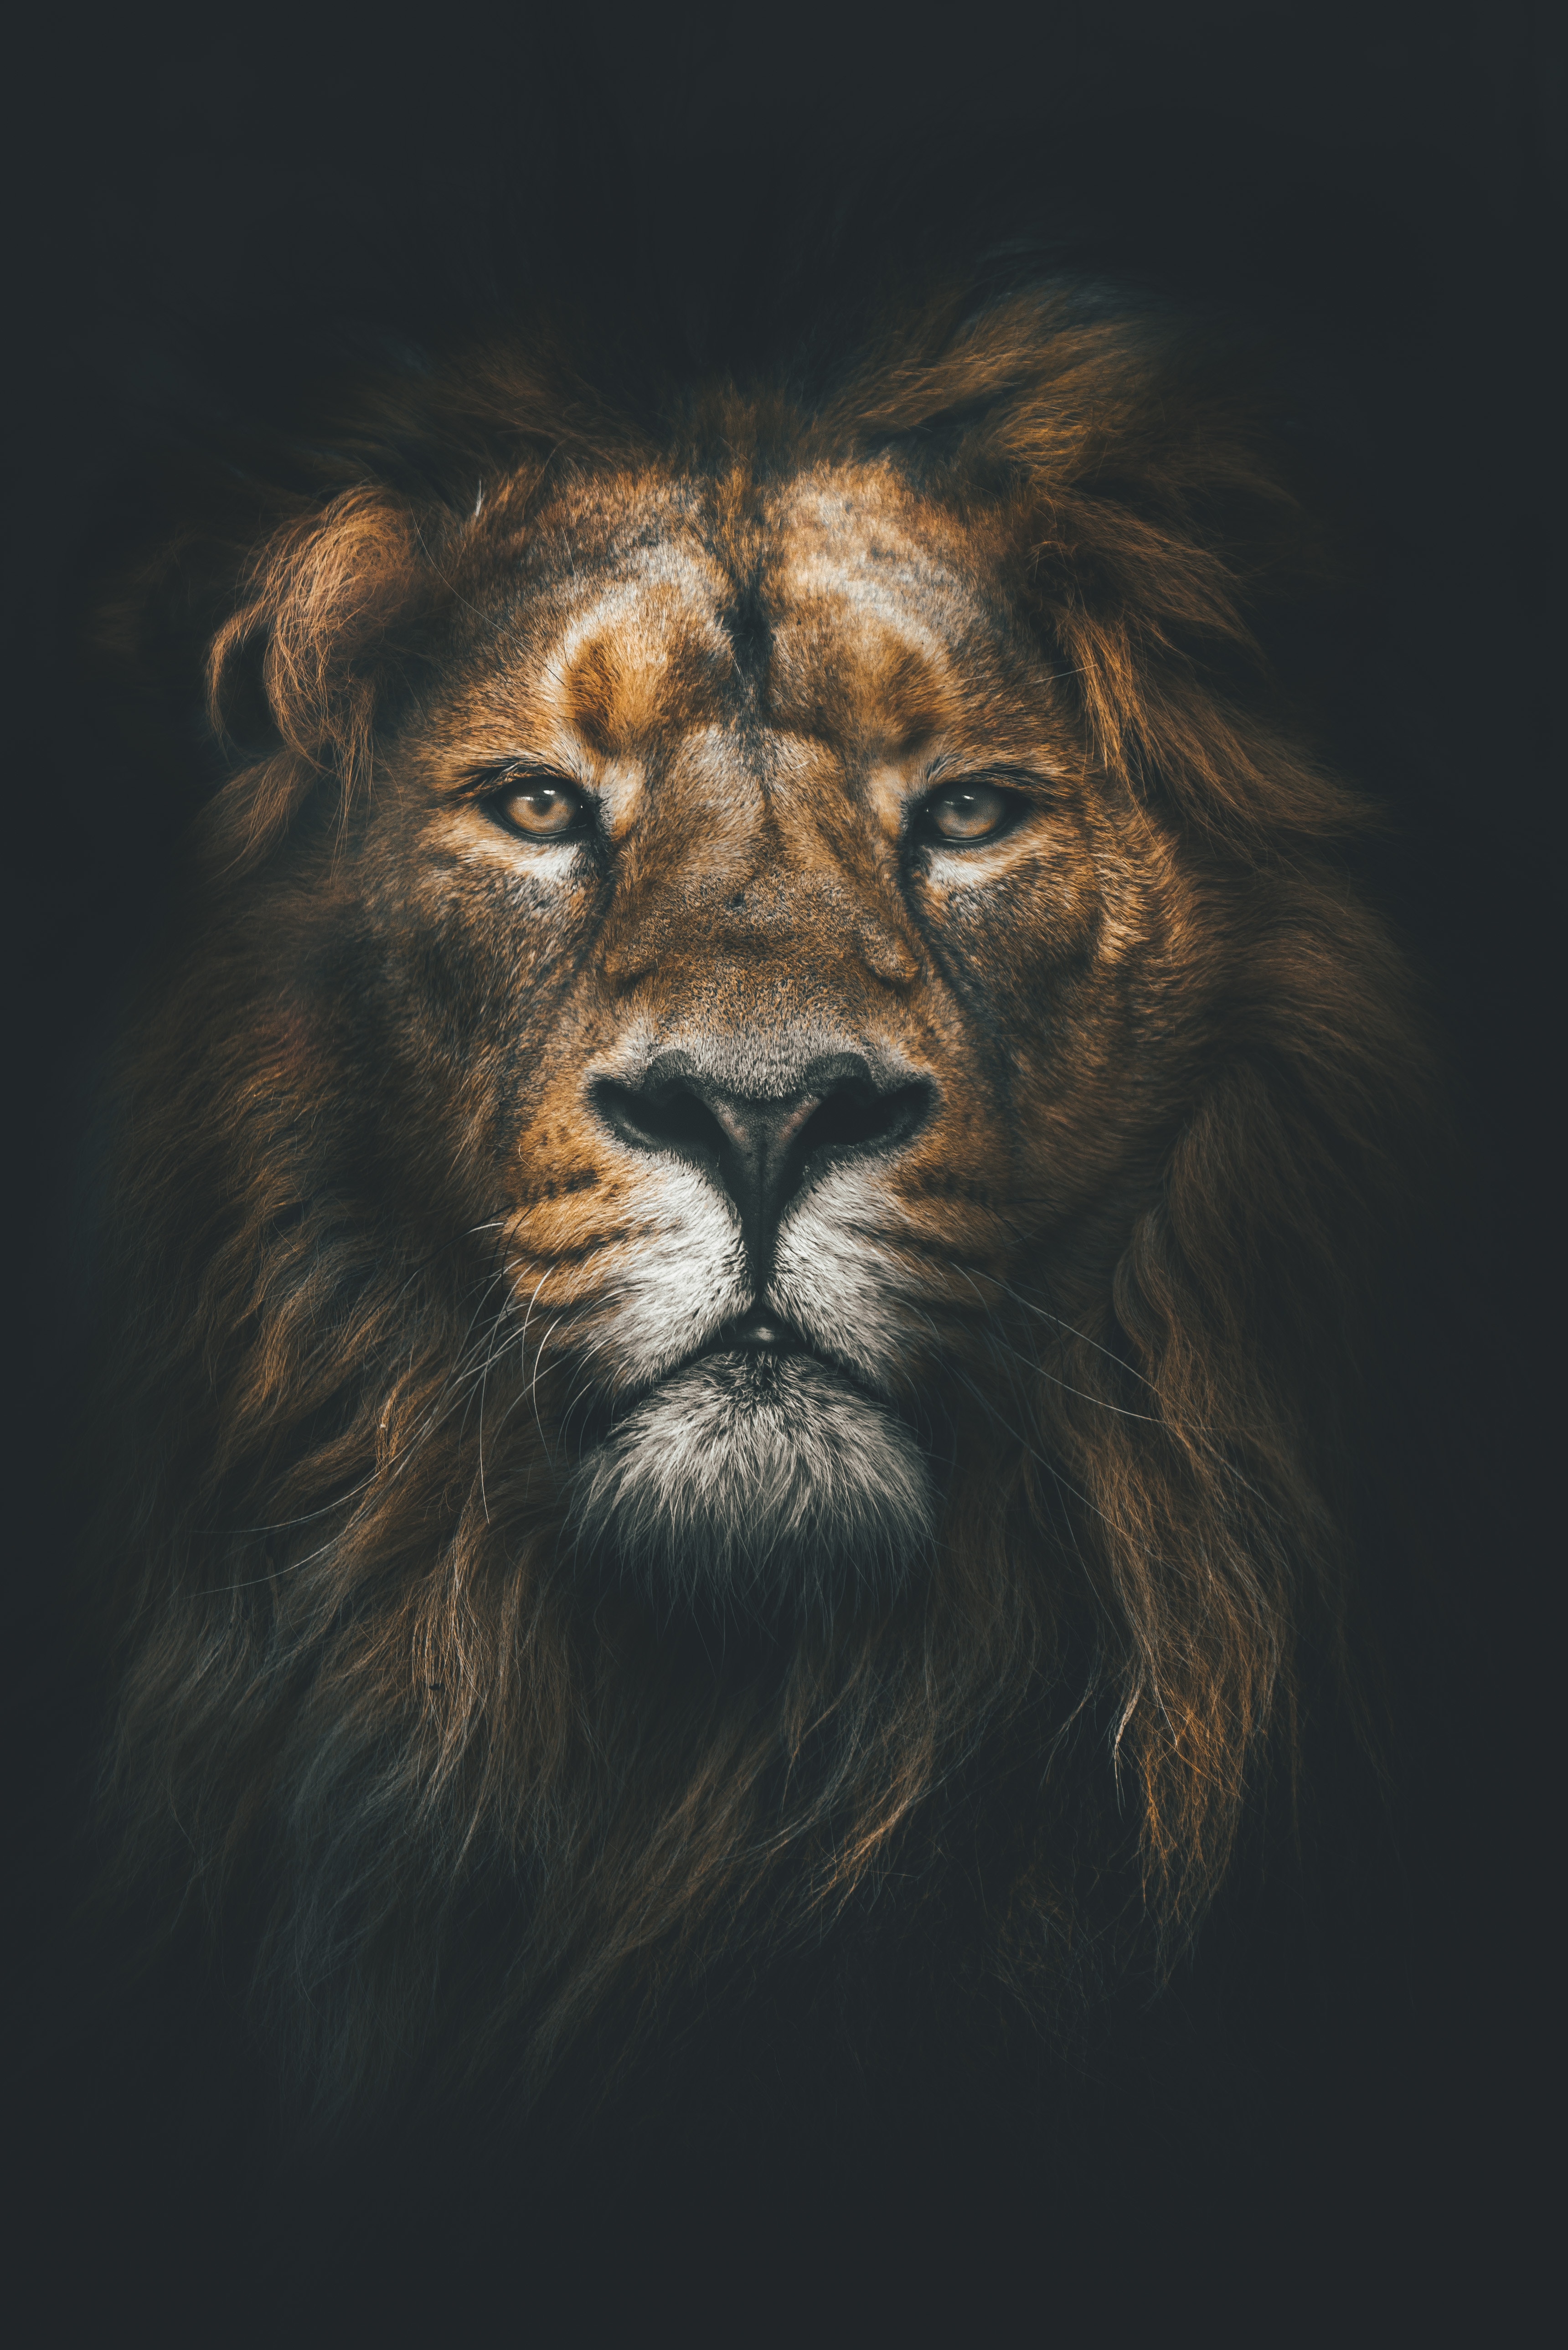 156199 descargar imagen león, animales, depredador, un leon, bozal, visión, opinión, melena: fondos de pantalla y protectores de pantalla gratis